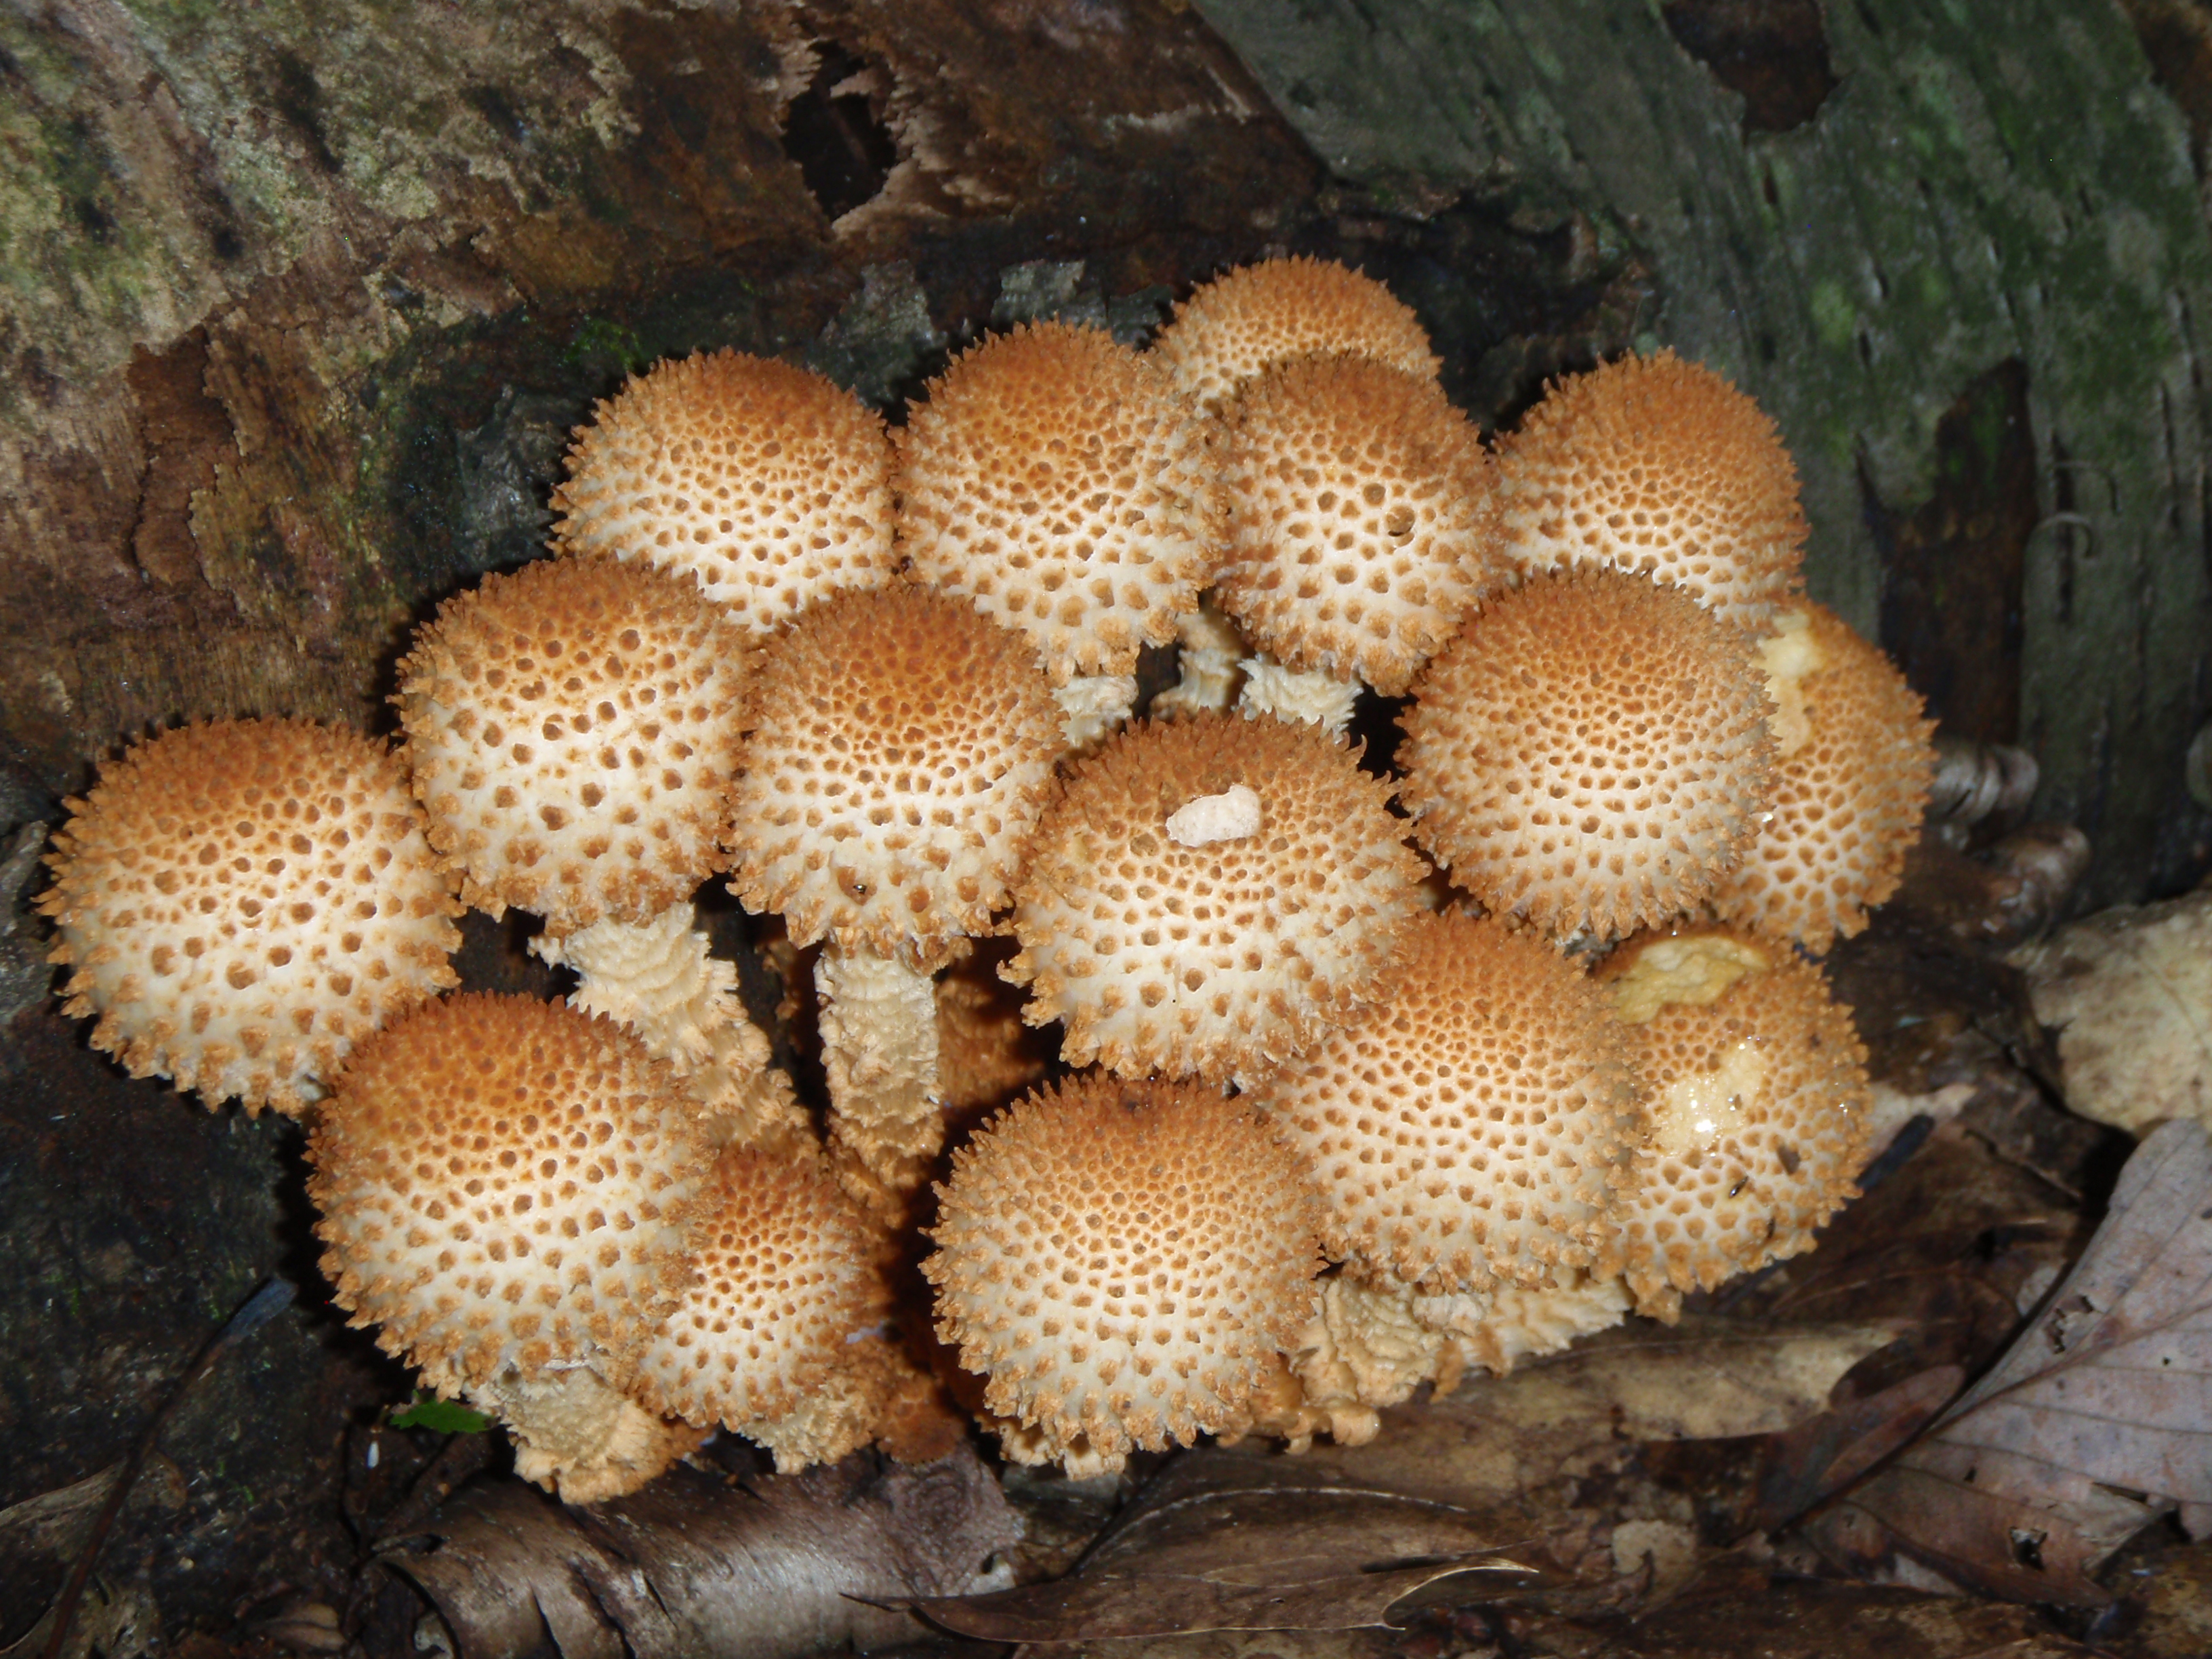 Wild, Wonderful World of Fungus – Wildlife Research & Conservation